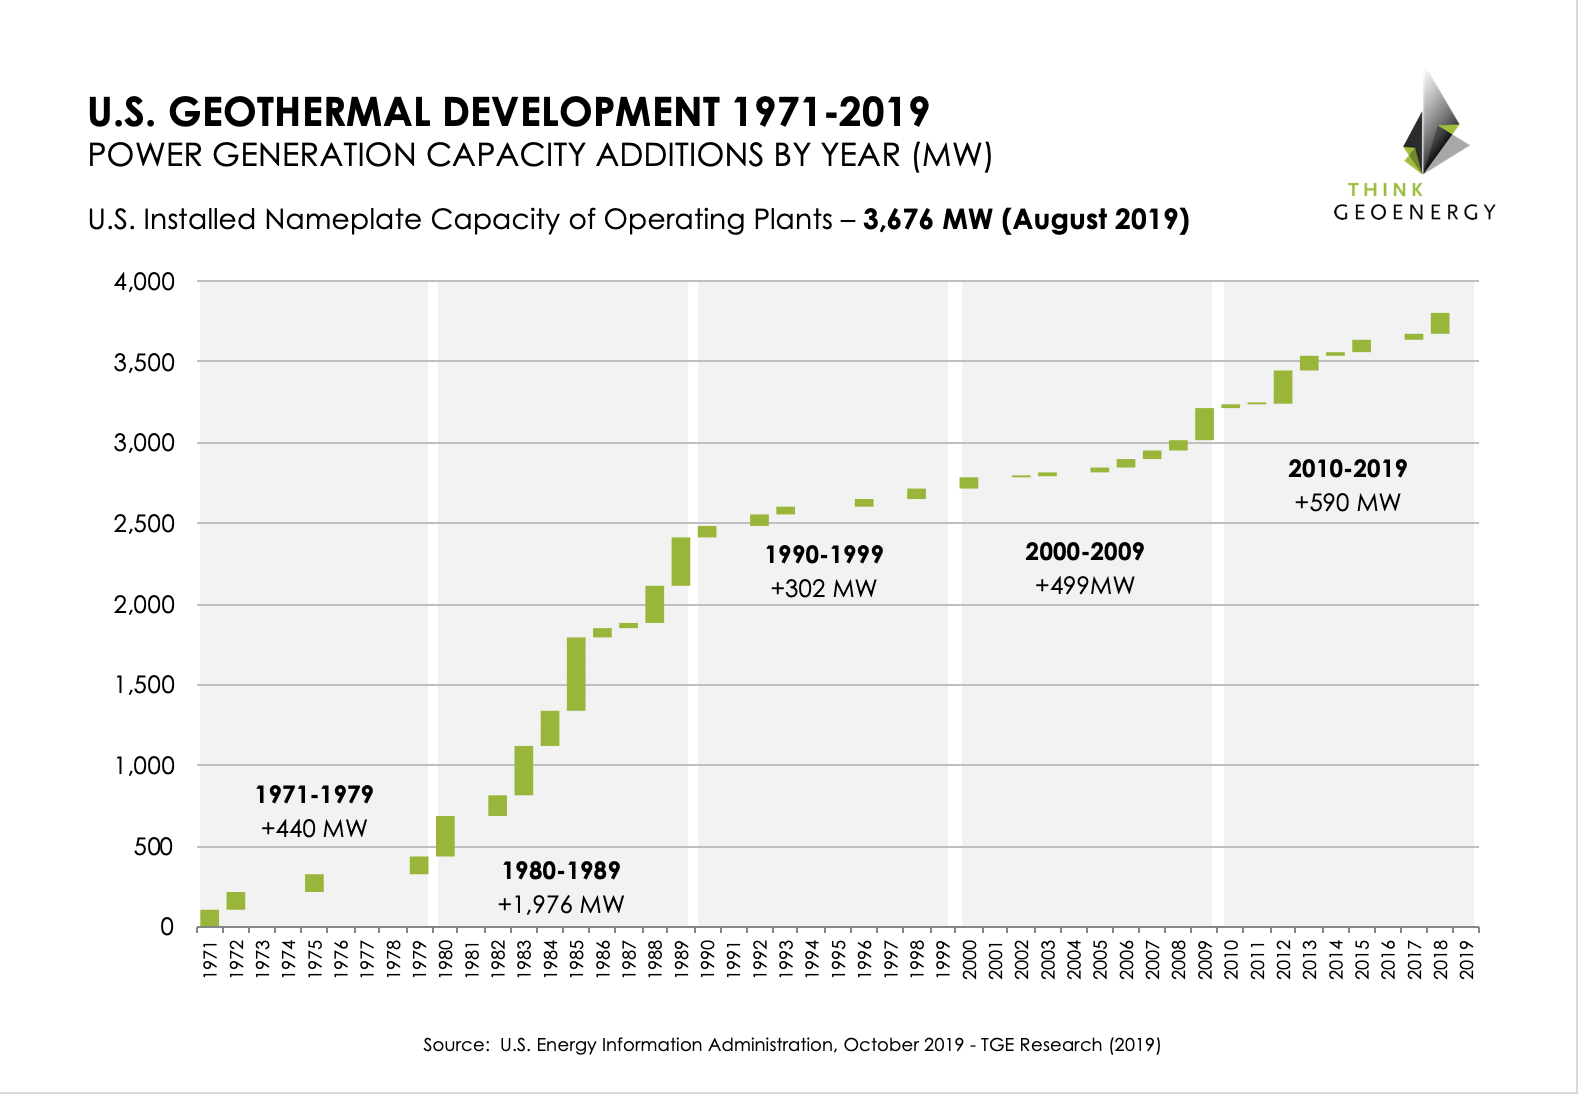 geothermal energy graph